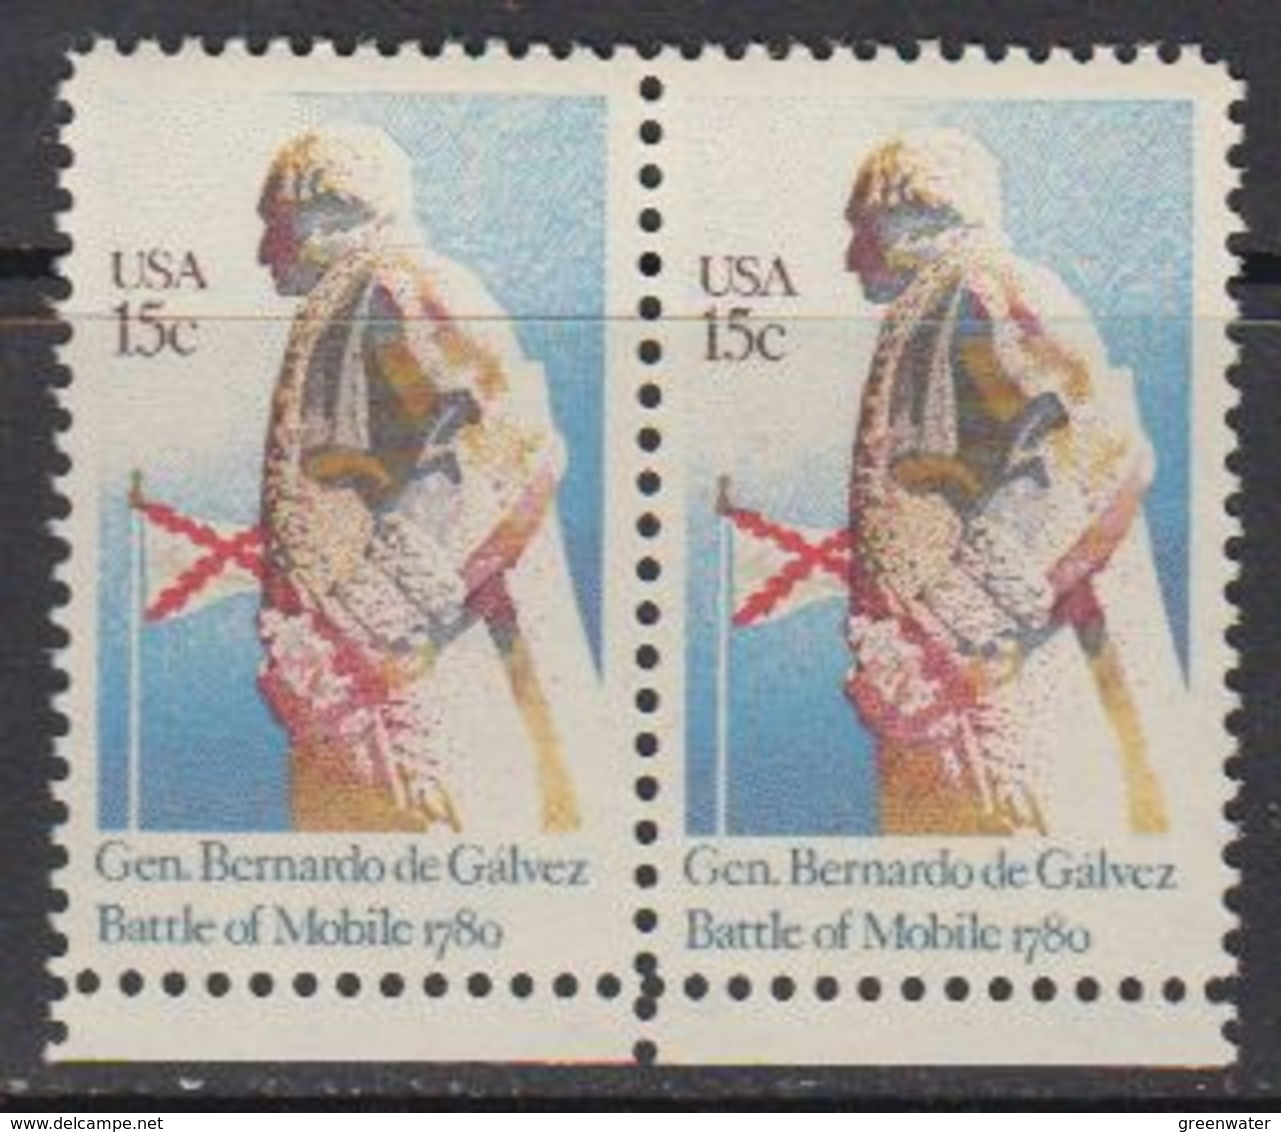 USA 1980 General Bernardo De Galvez / Battle Of Mobile 1v (pair) ** Mnh (41837G) - Ongebruikt